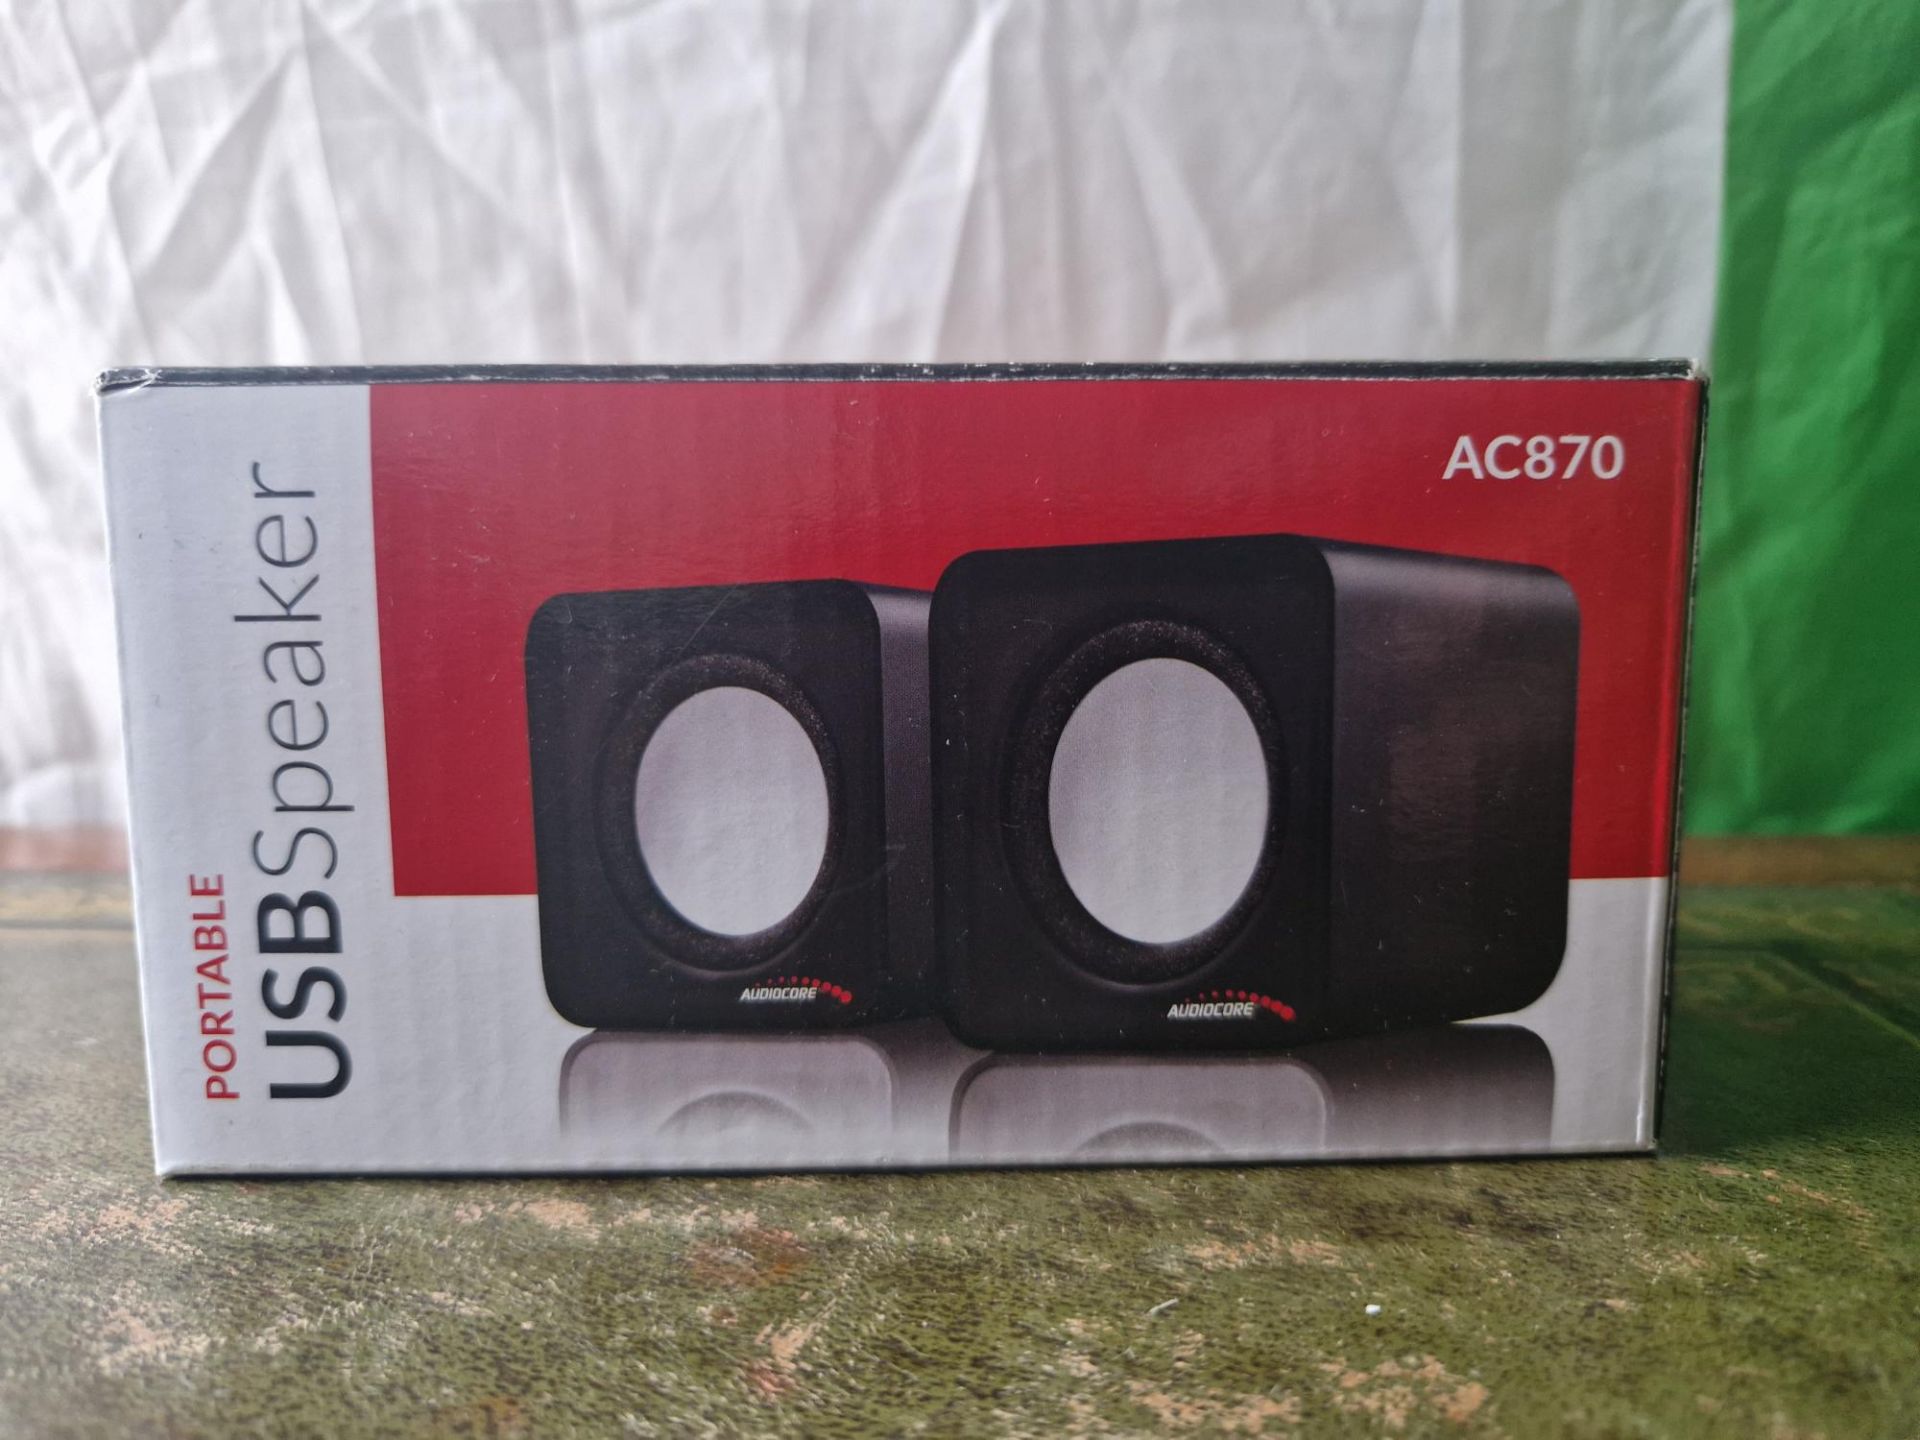 Usb speakers